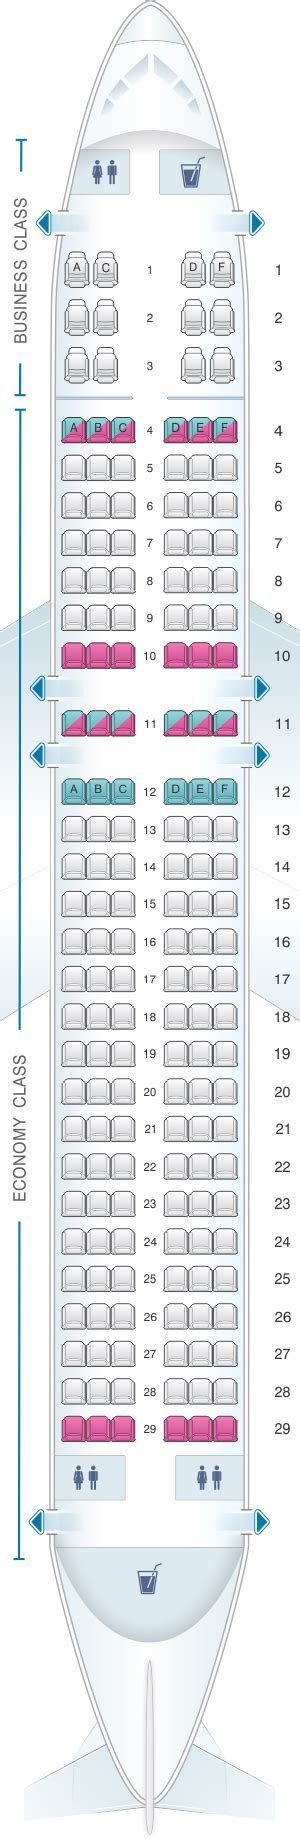 Plan De Cabine Brussels Airlines Airbus A320 Seatmaestrofr